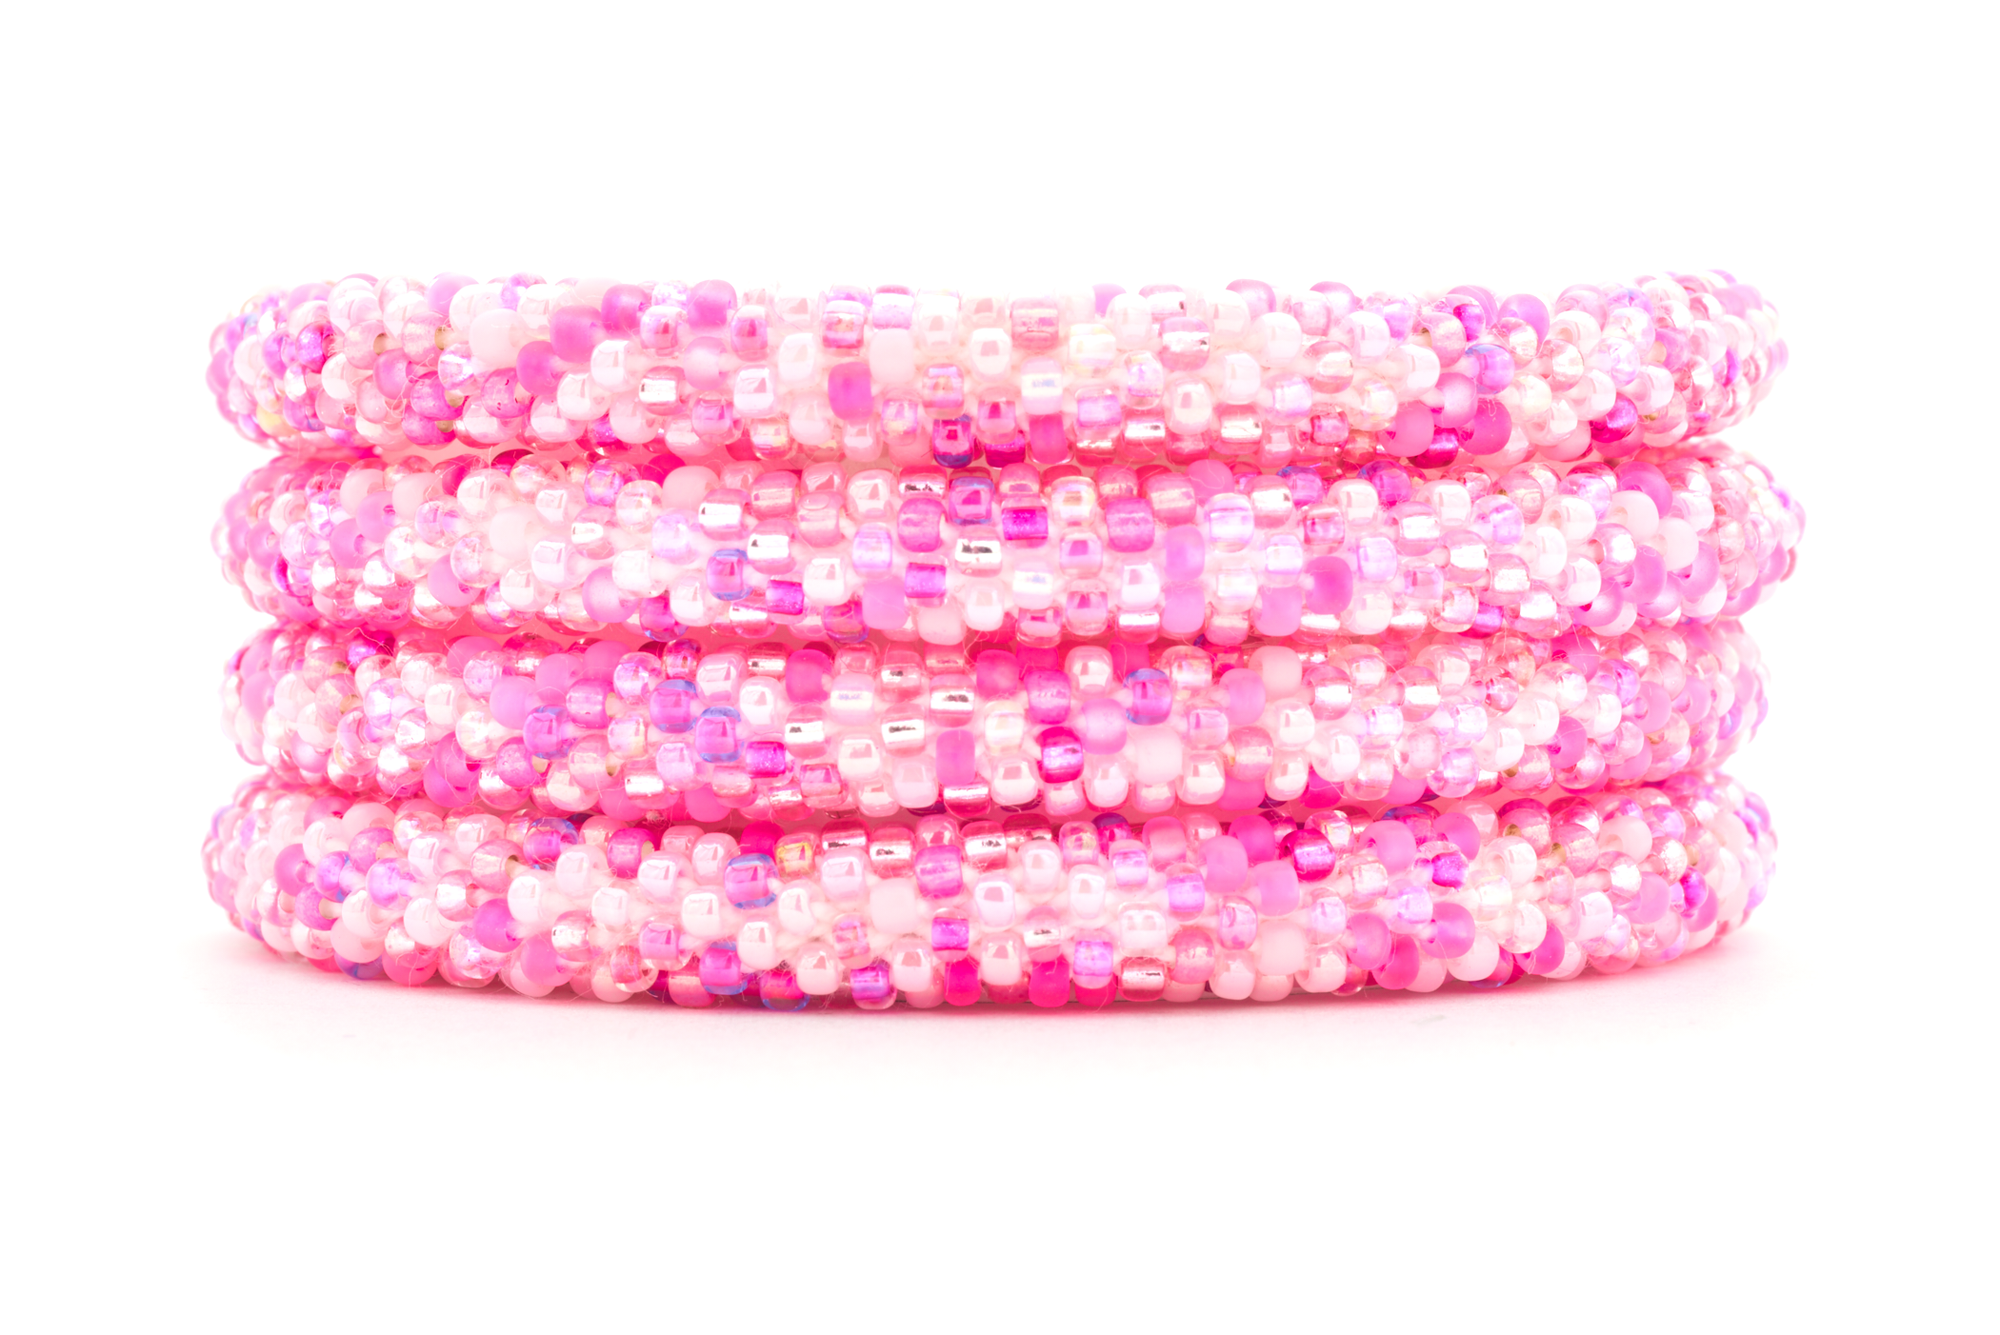 Sashka Co. Extended 8" Bracelet Pink Pink Confetti - Extended 8"